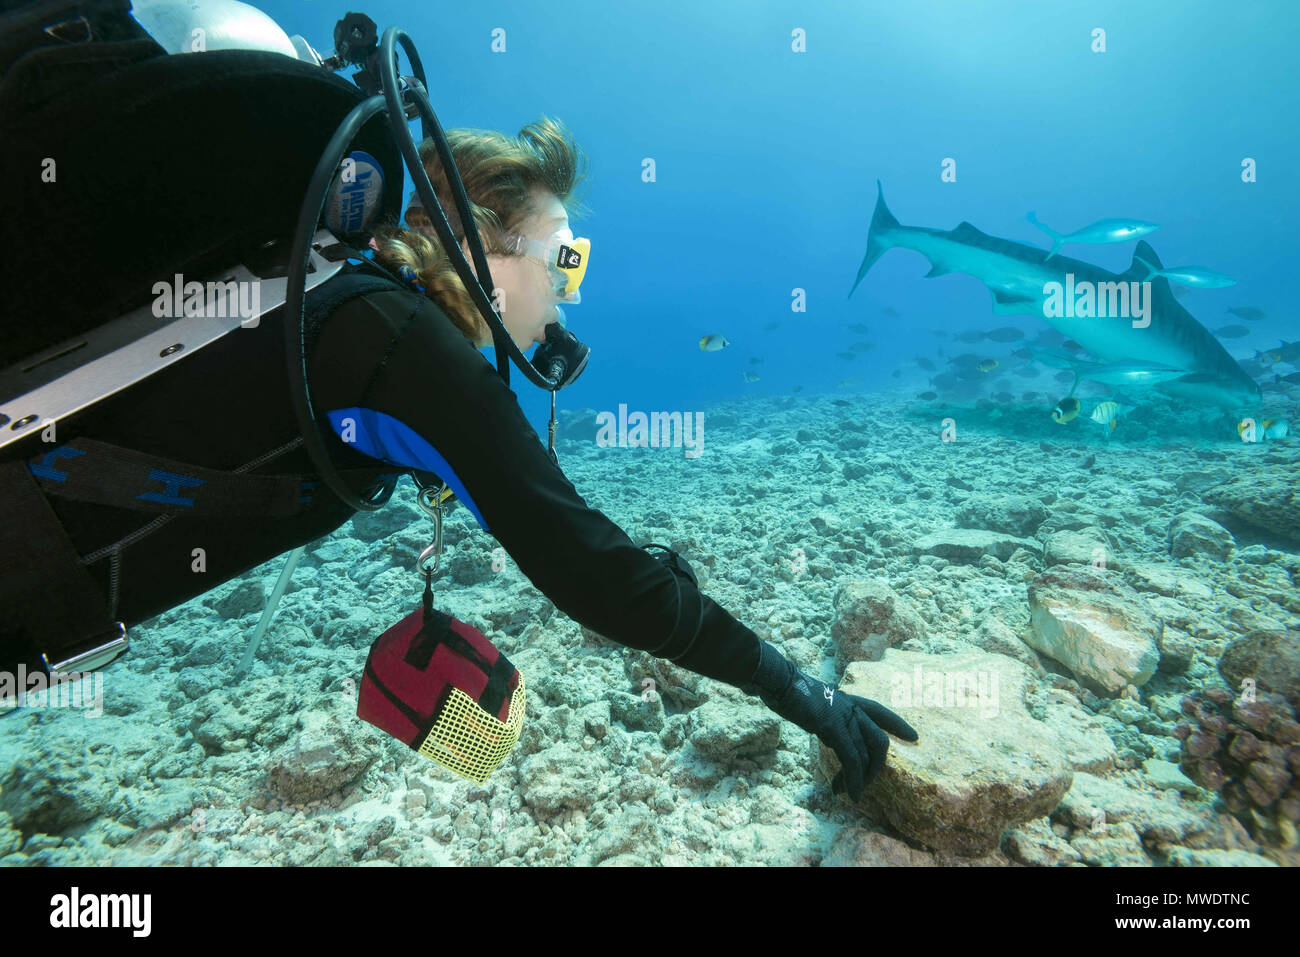 March 13, 2018 - Island (Atoll) Fuvahmulah, Indi, Maldives - Female scuba diver looks at a Tiger Shark Credit: Andrey Nekrasov/ZUMA Wire/ZUMAPRESS.com/Alamy Live News Stock Photo